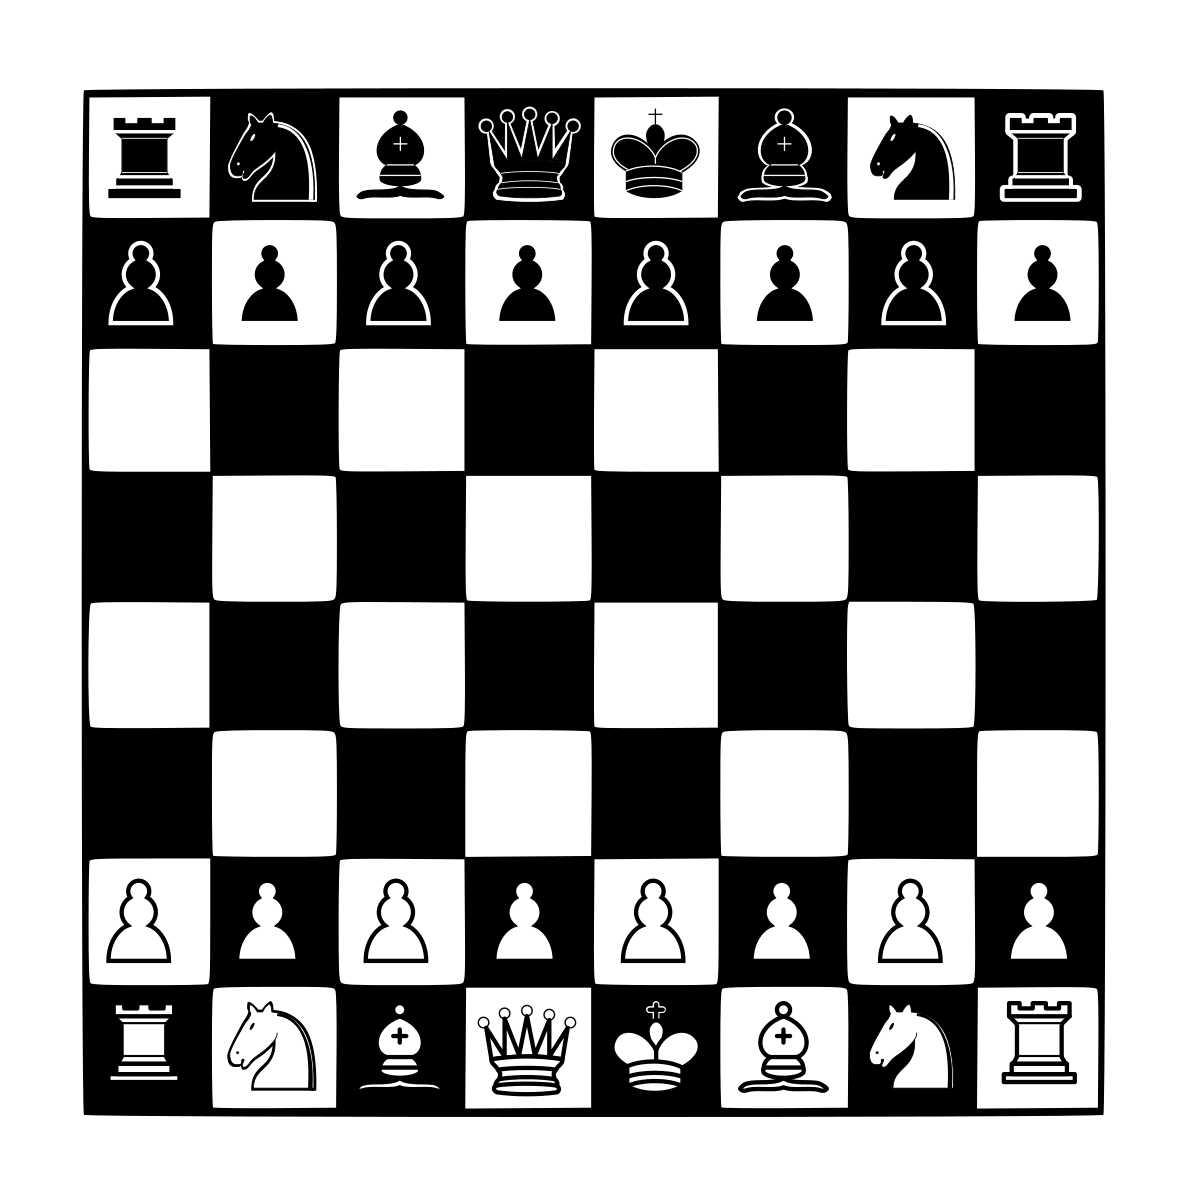 Шахматная доска настенная 104х104 см (с магнитными шахматными фигурами)